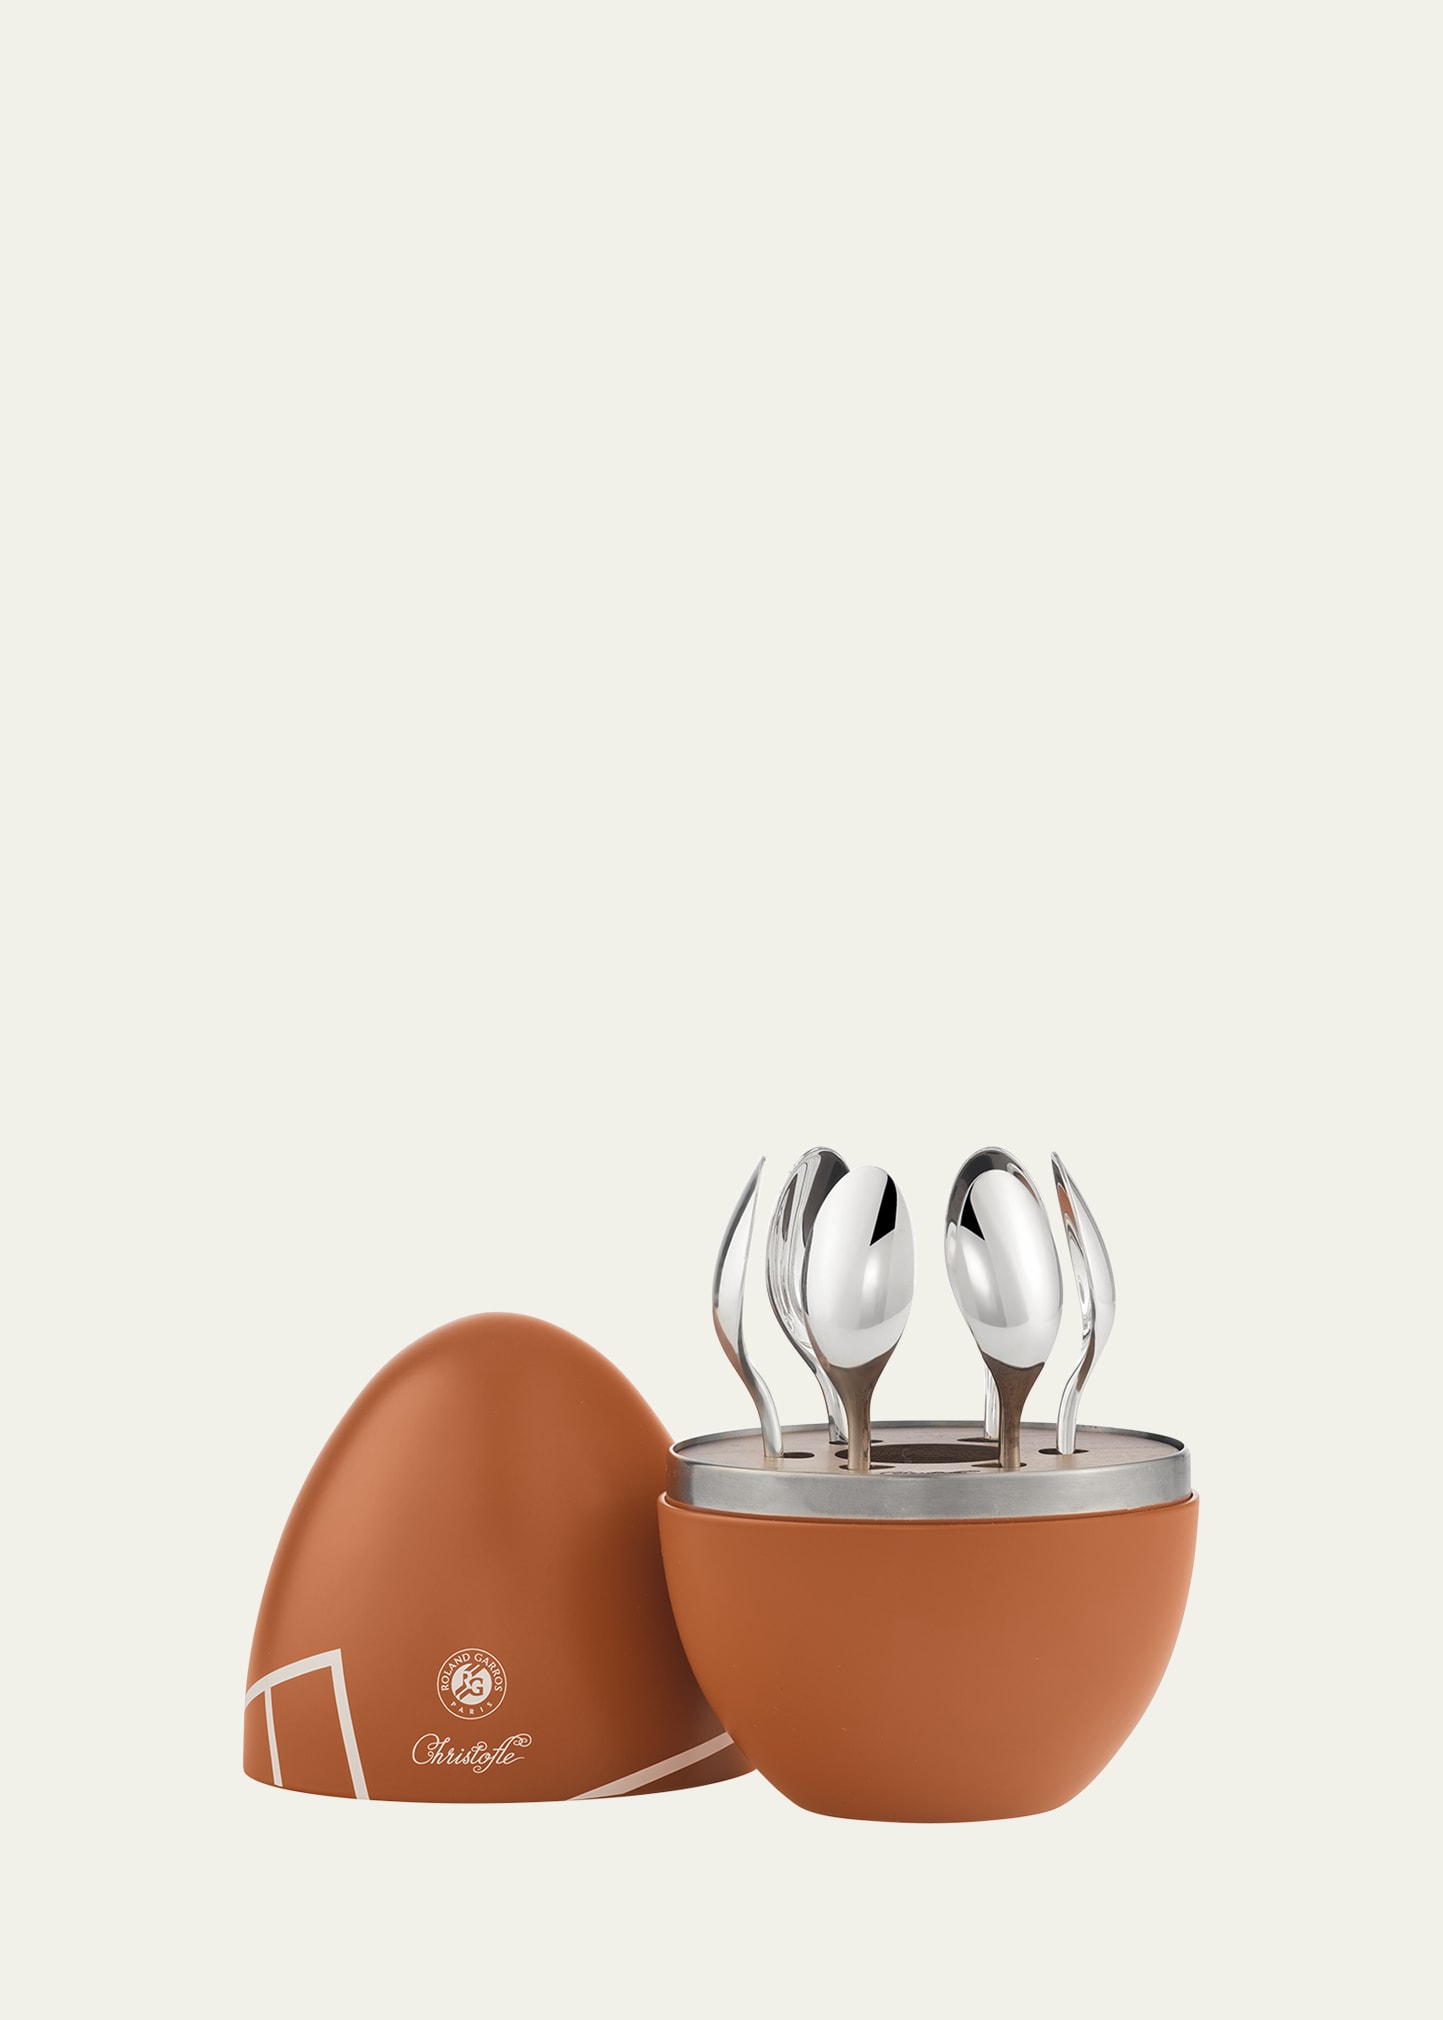 x Roland-Garros Mood Coffee Espresso Spoons, Set of 6